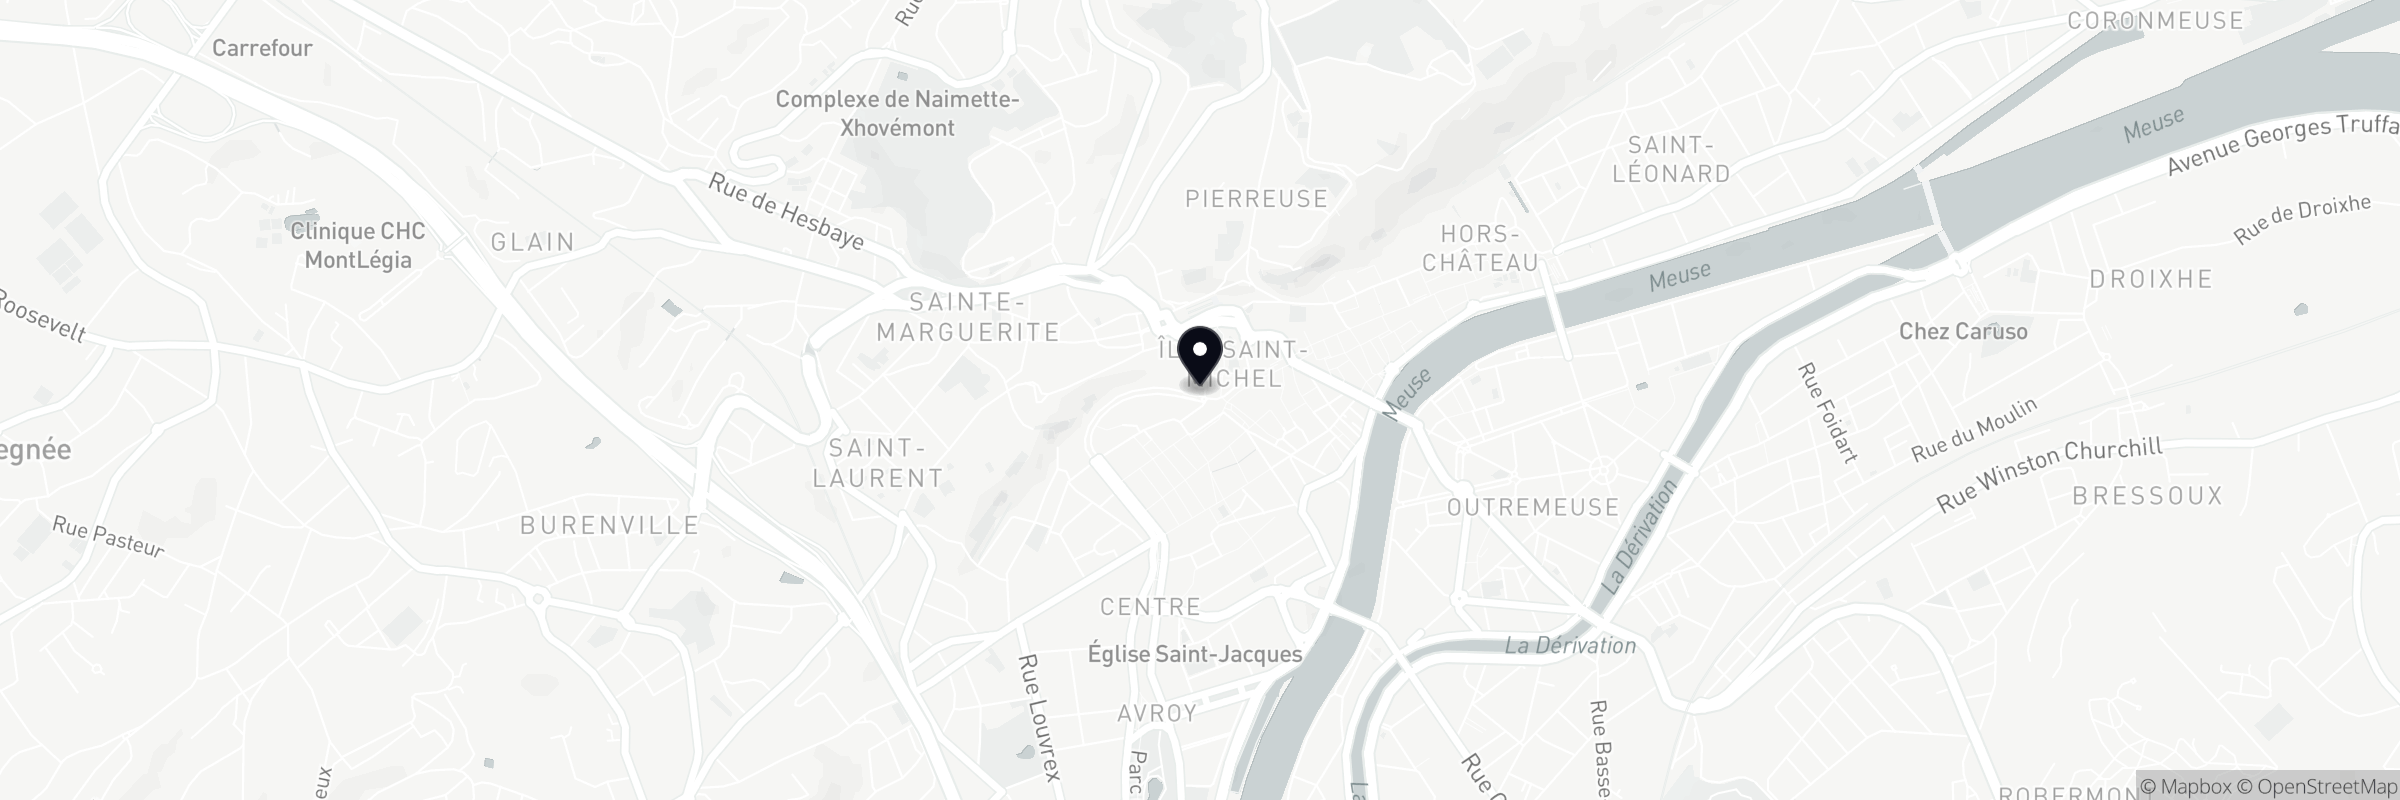 Kaart met het adres van Liège